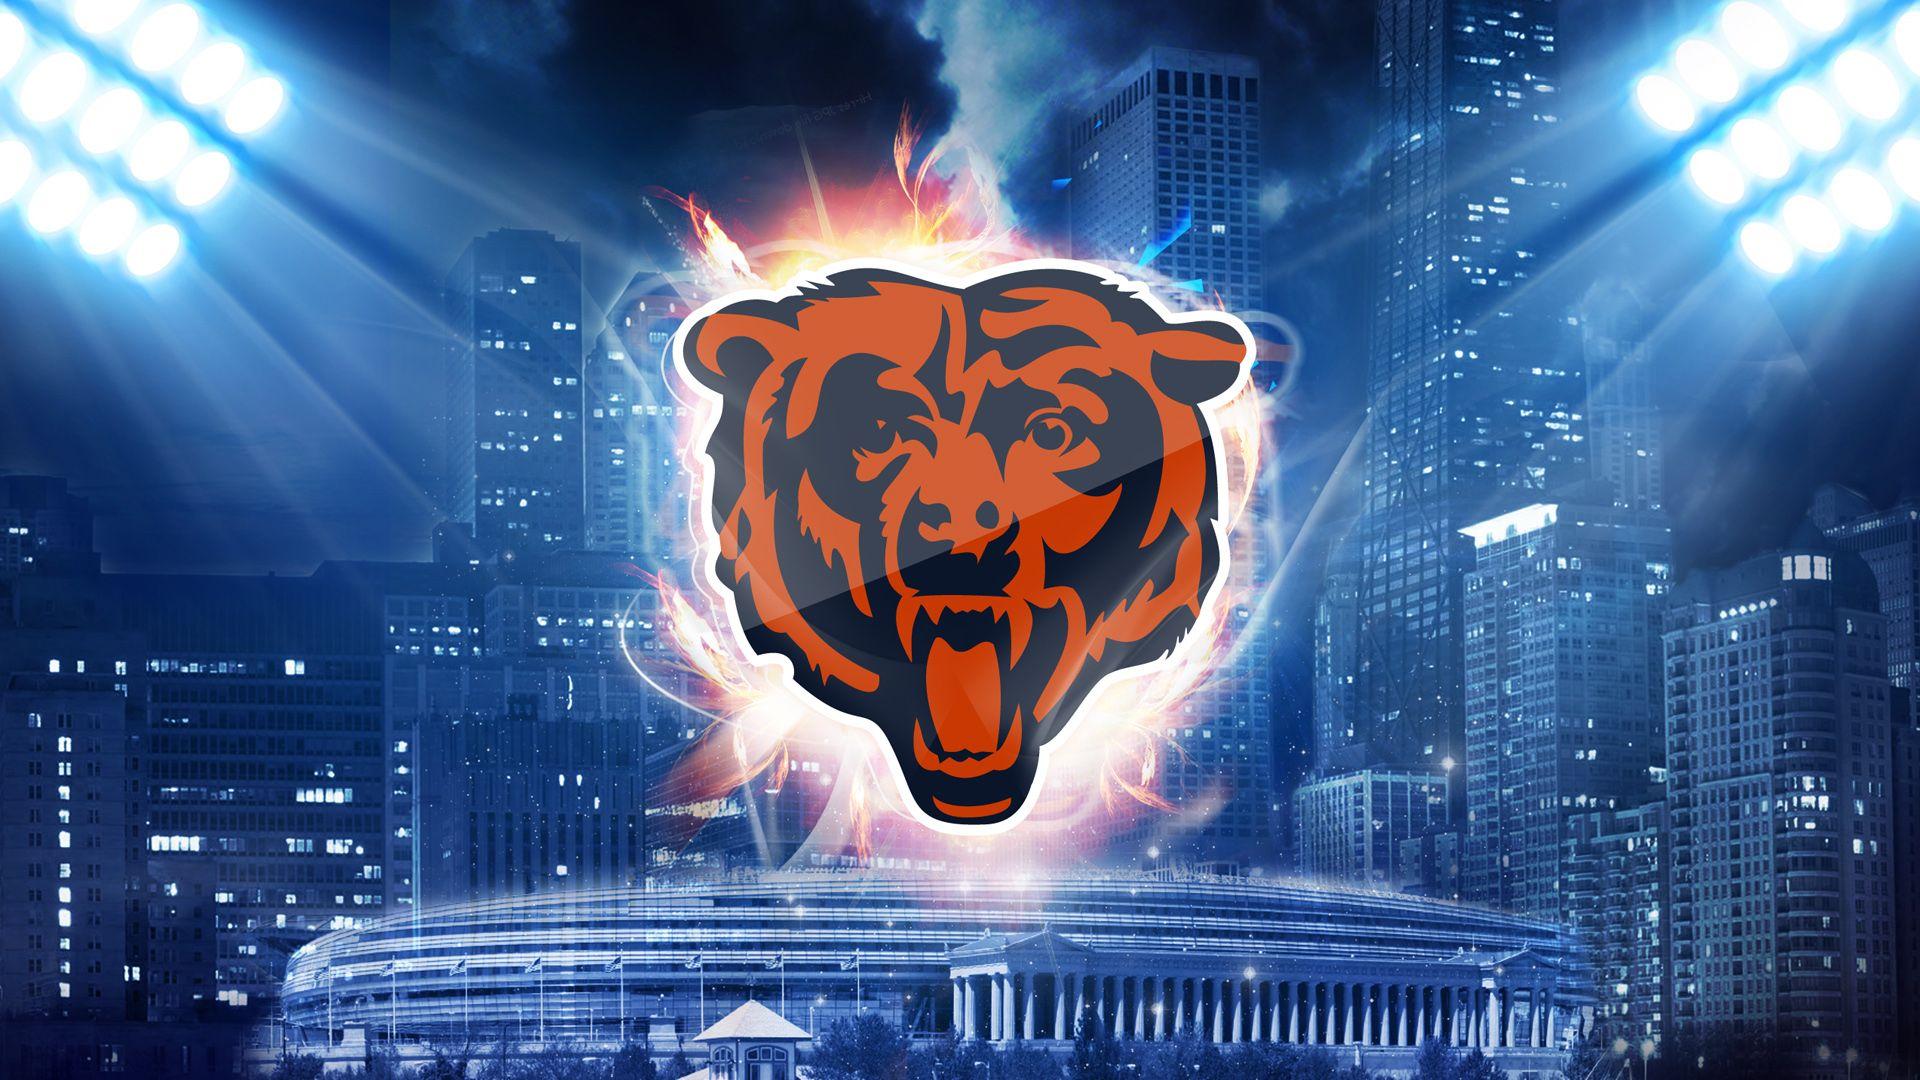 Chicago Bears Desktop Wallpaper 52903 1920x1080 px